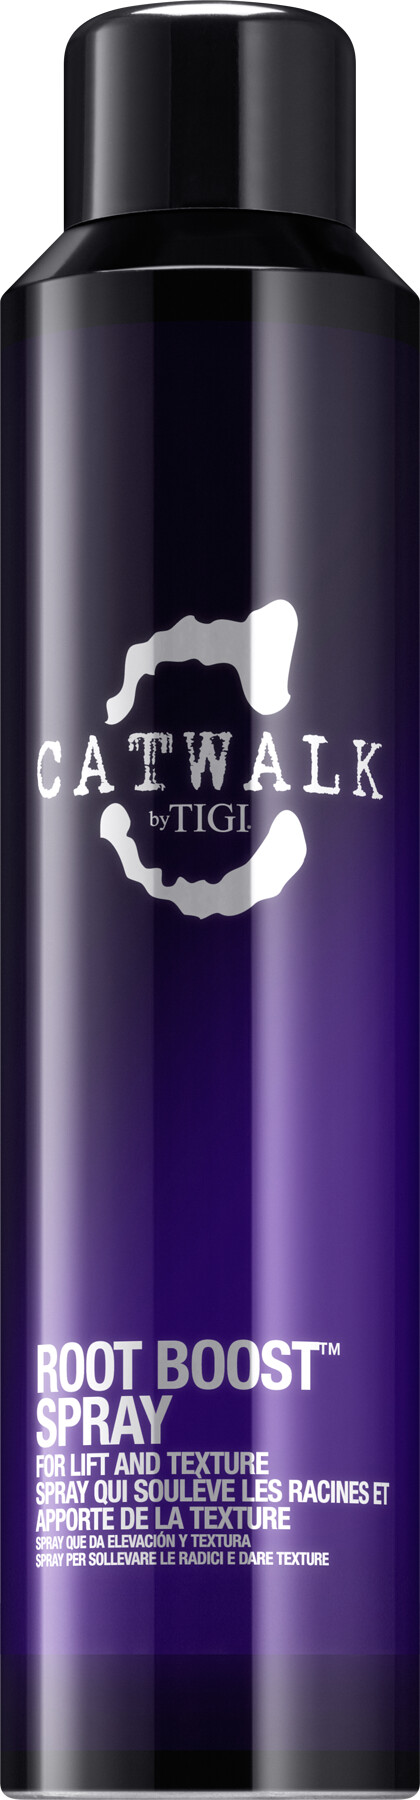 TIGI Catwalk Root Boost Spray 243ml